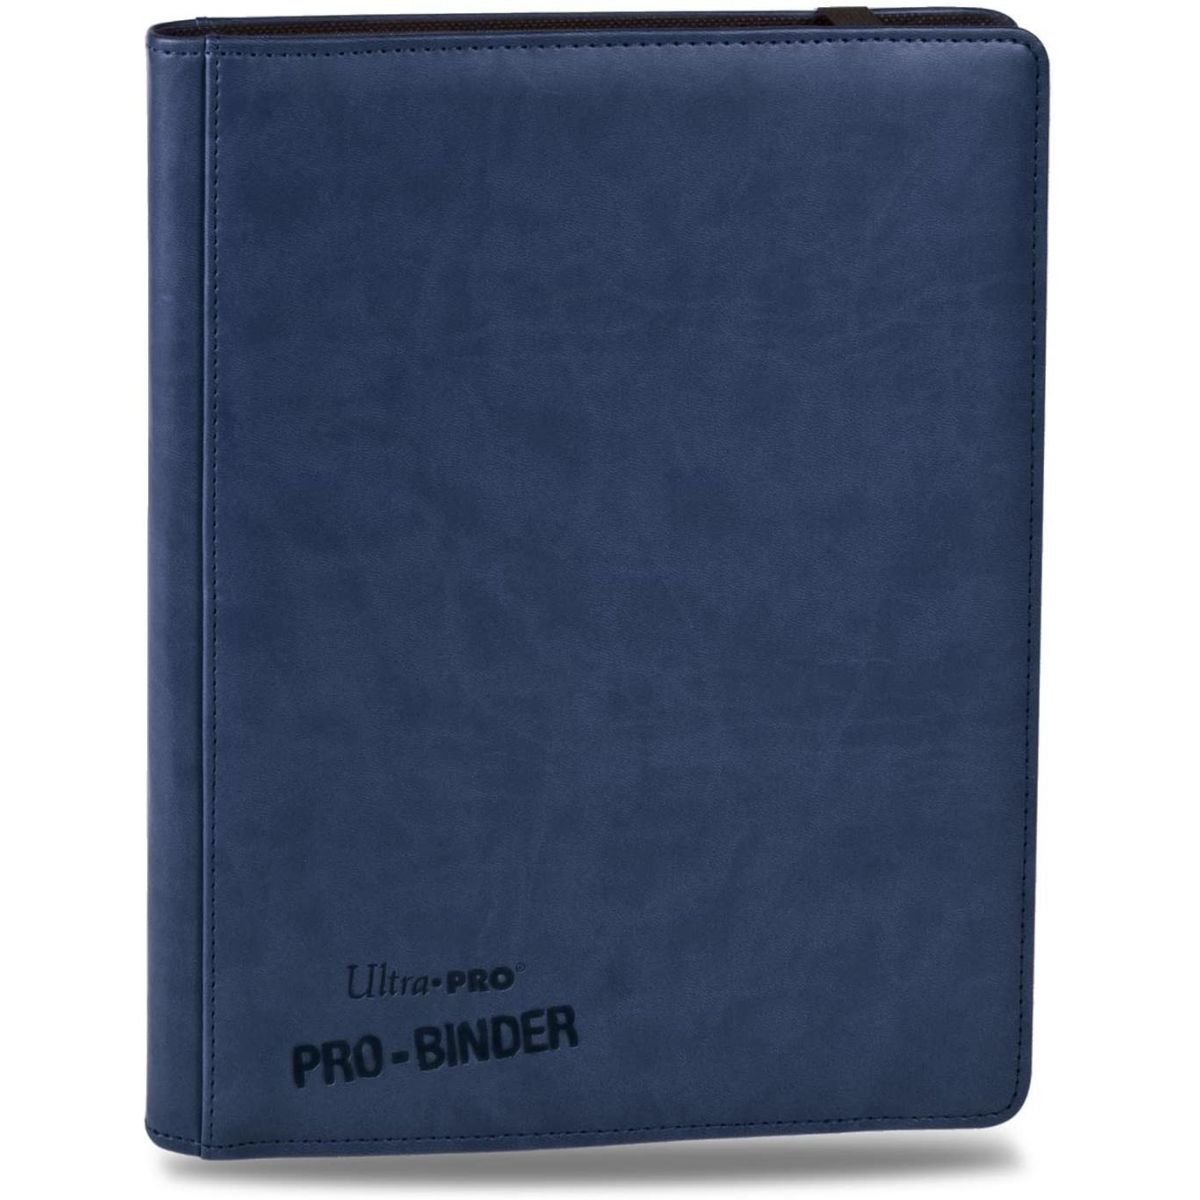 Pro Binder Premium - 9 Cases / 360 Emplacements - Bleu